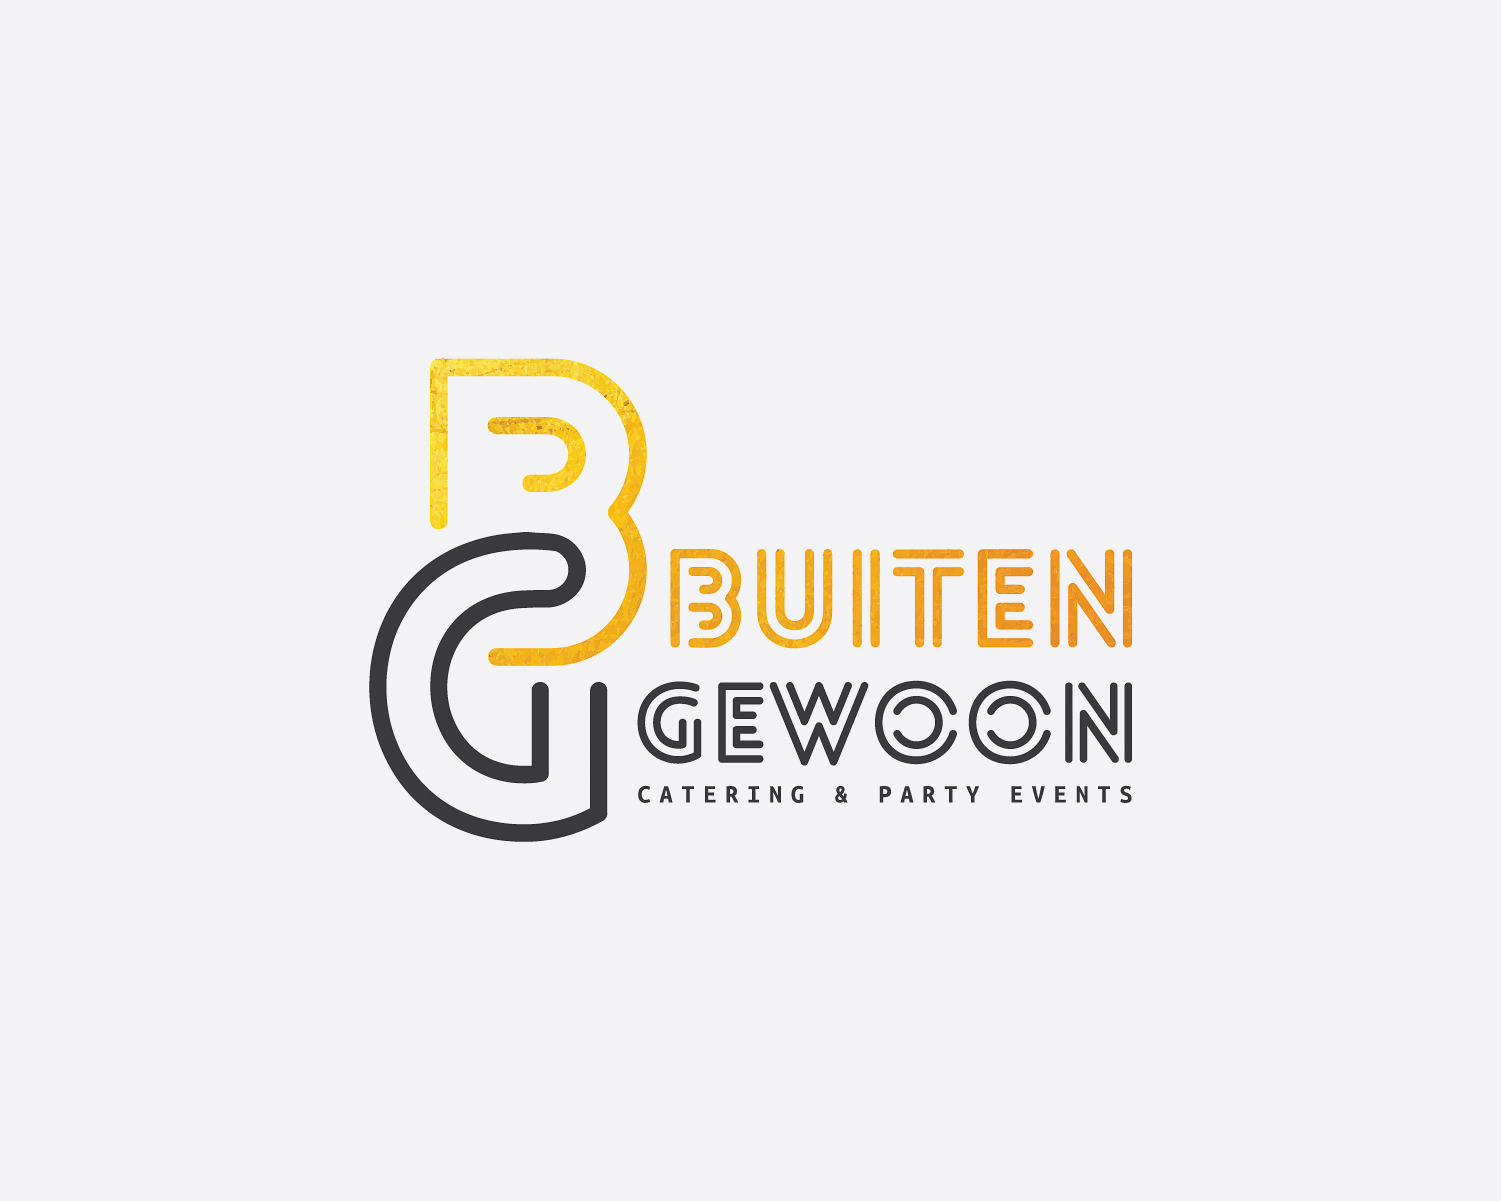 Logo Buiten Gewoon wit